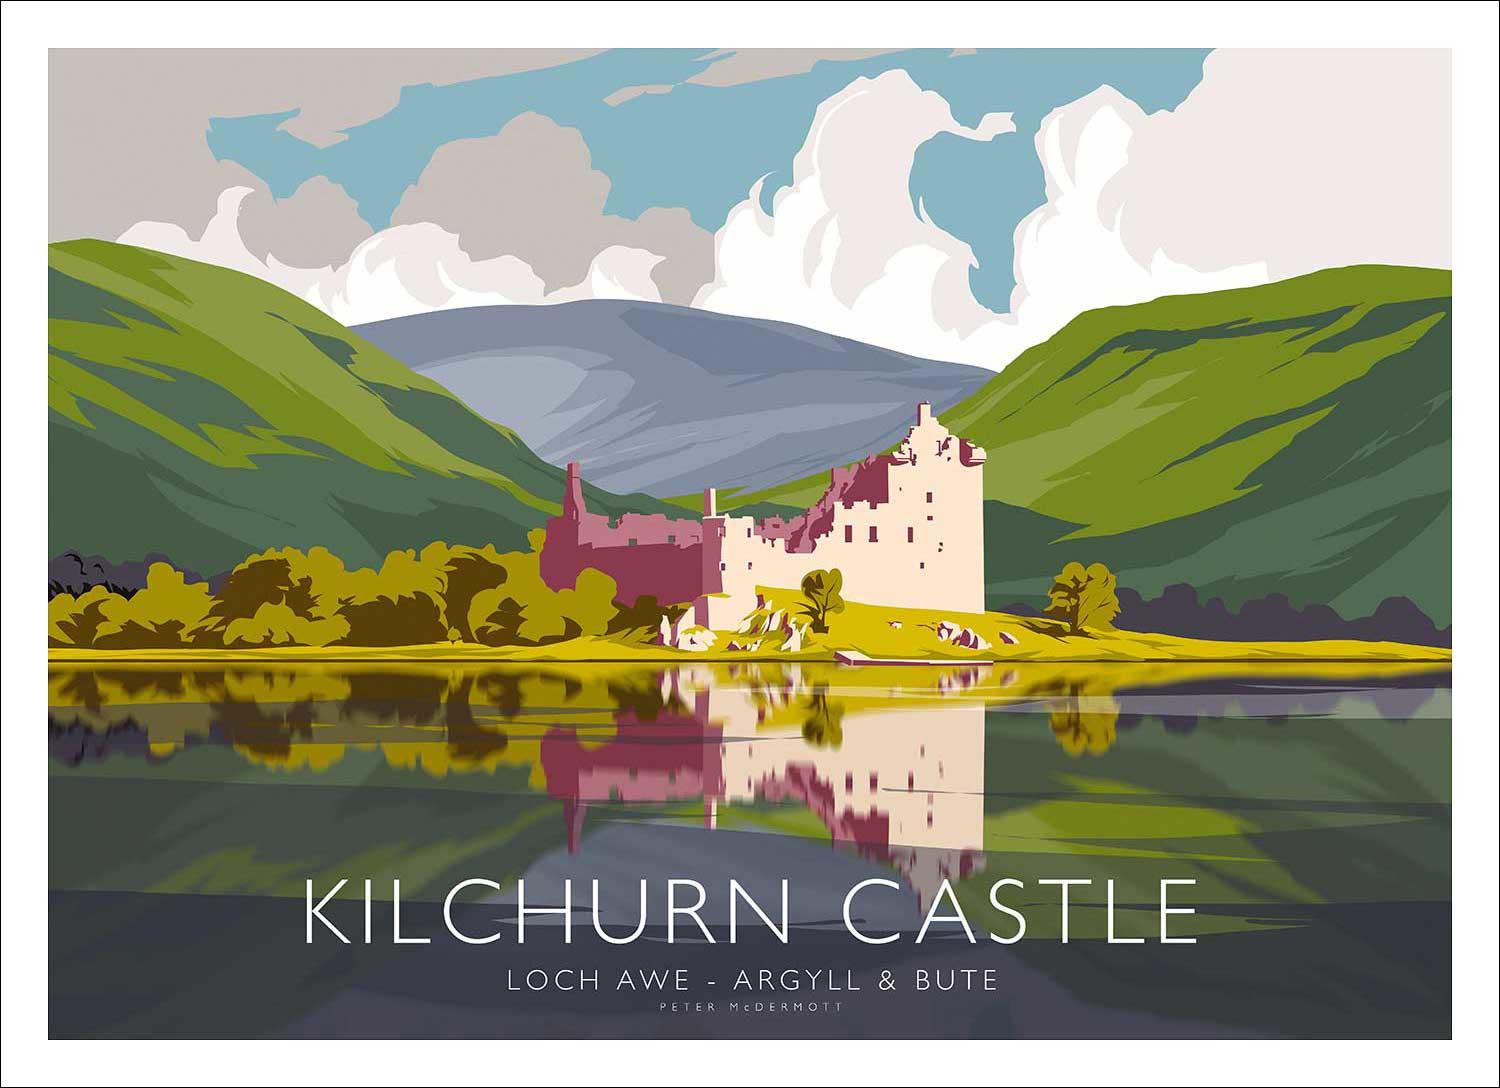 Kilchurn Castle Art Print from an original illustration by artist Peter McDermott